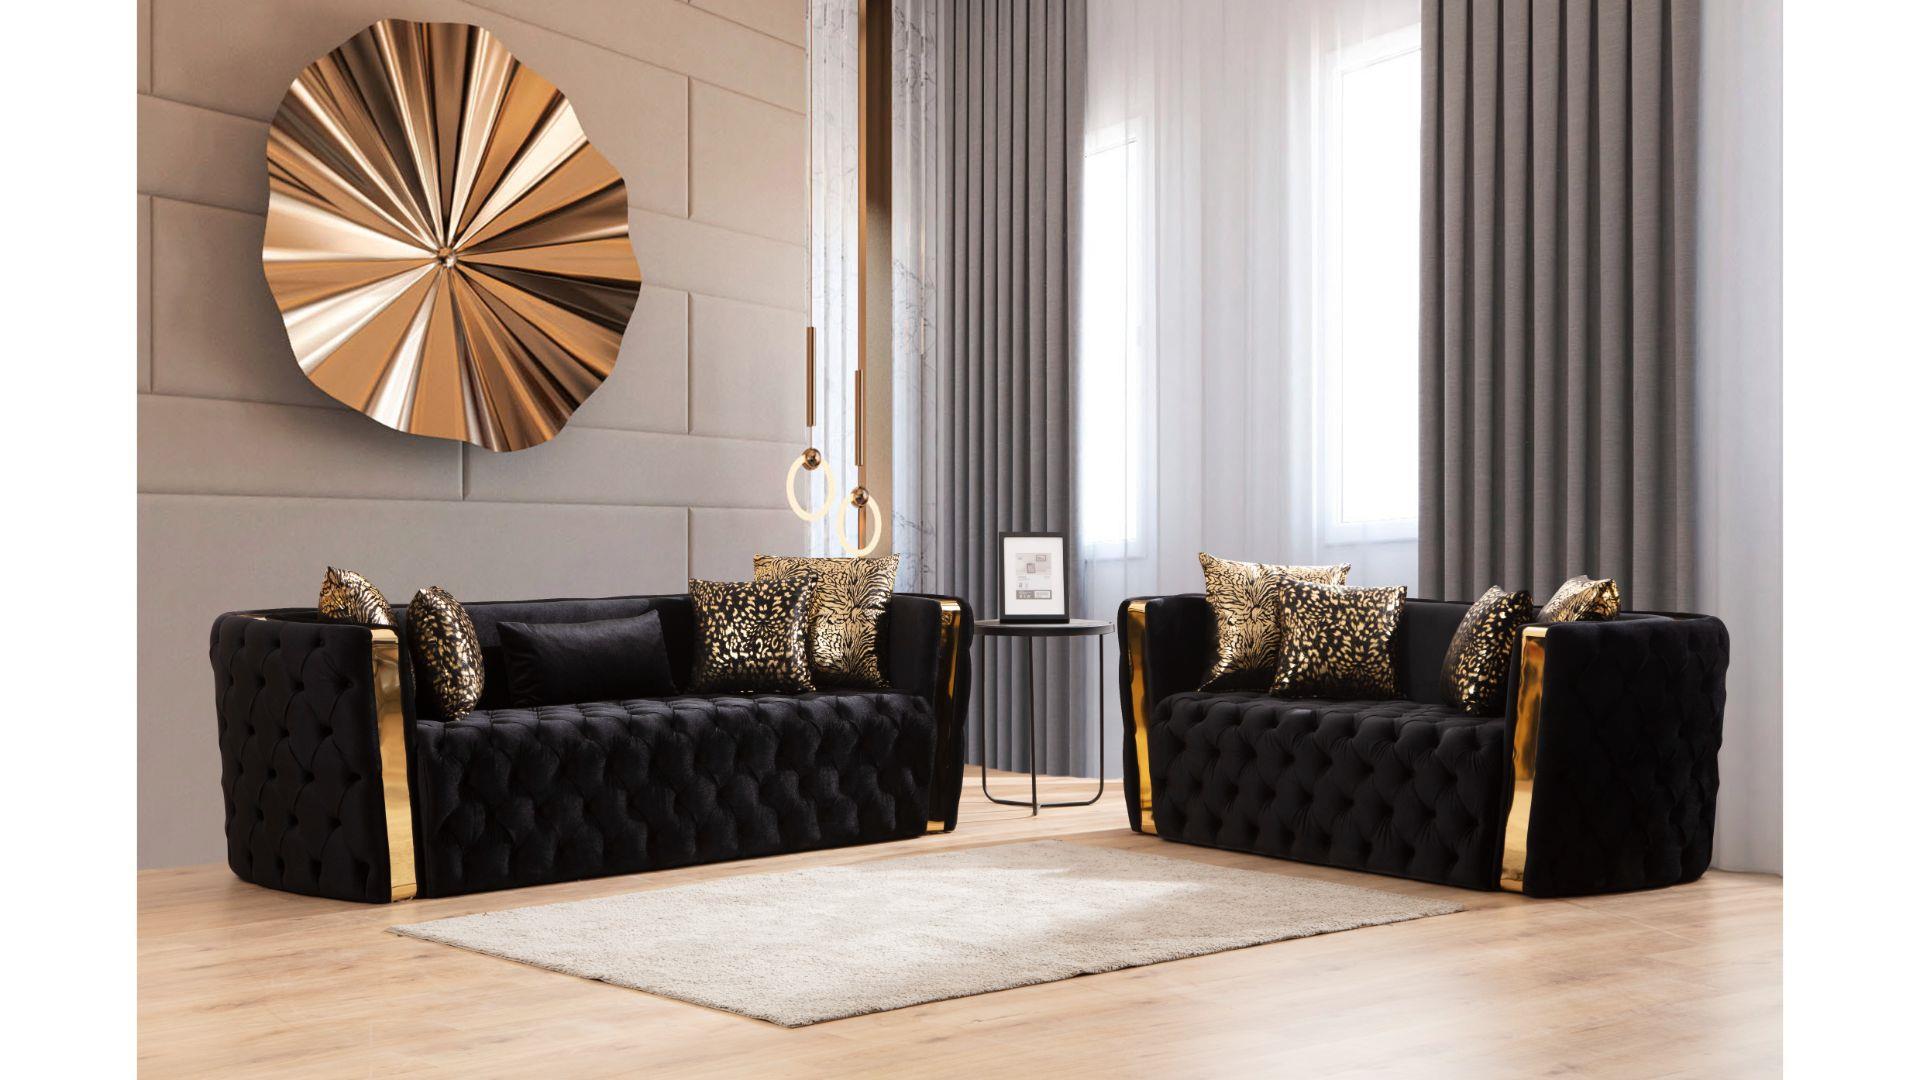 Contemporary, Modern Sofa Set NAOMI 698781417133-2PC in Black Velvet